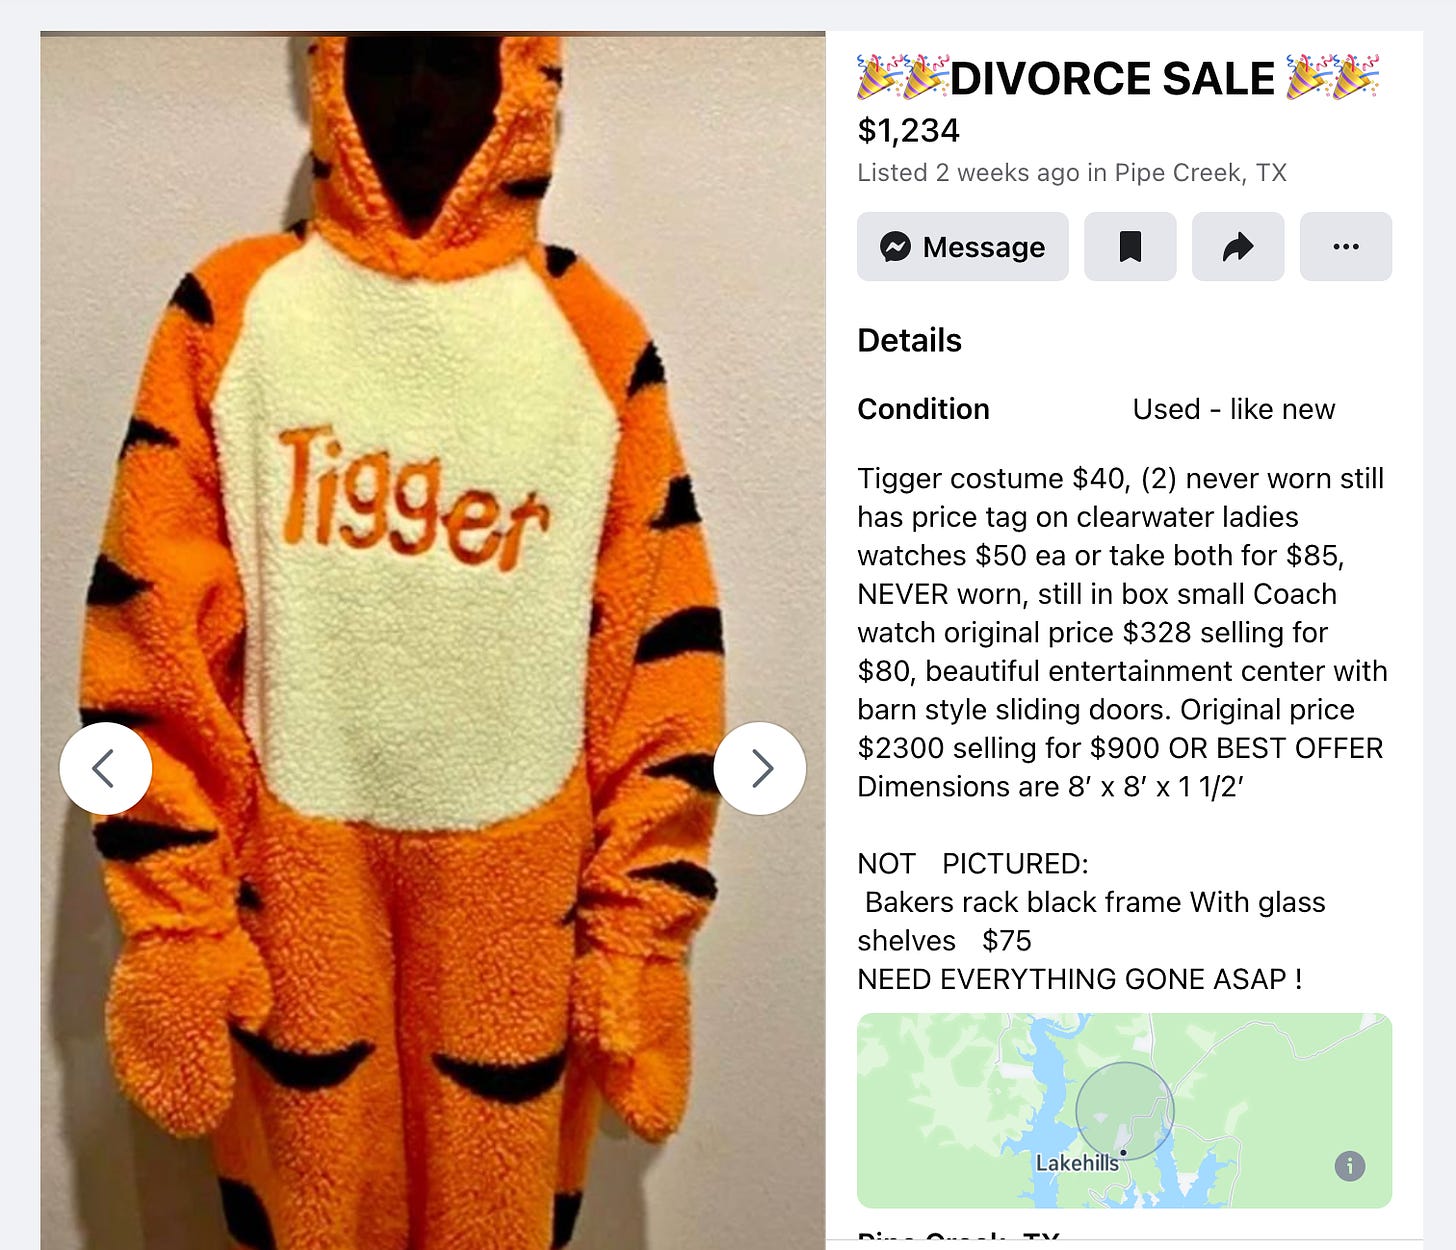 facebook marketplace listing for DIVORCE SALE. Tigger costume, $40. photo of full body Tigger costume